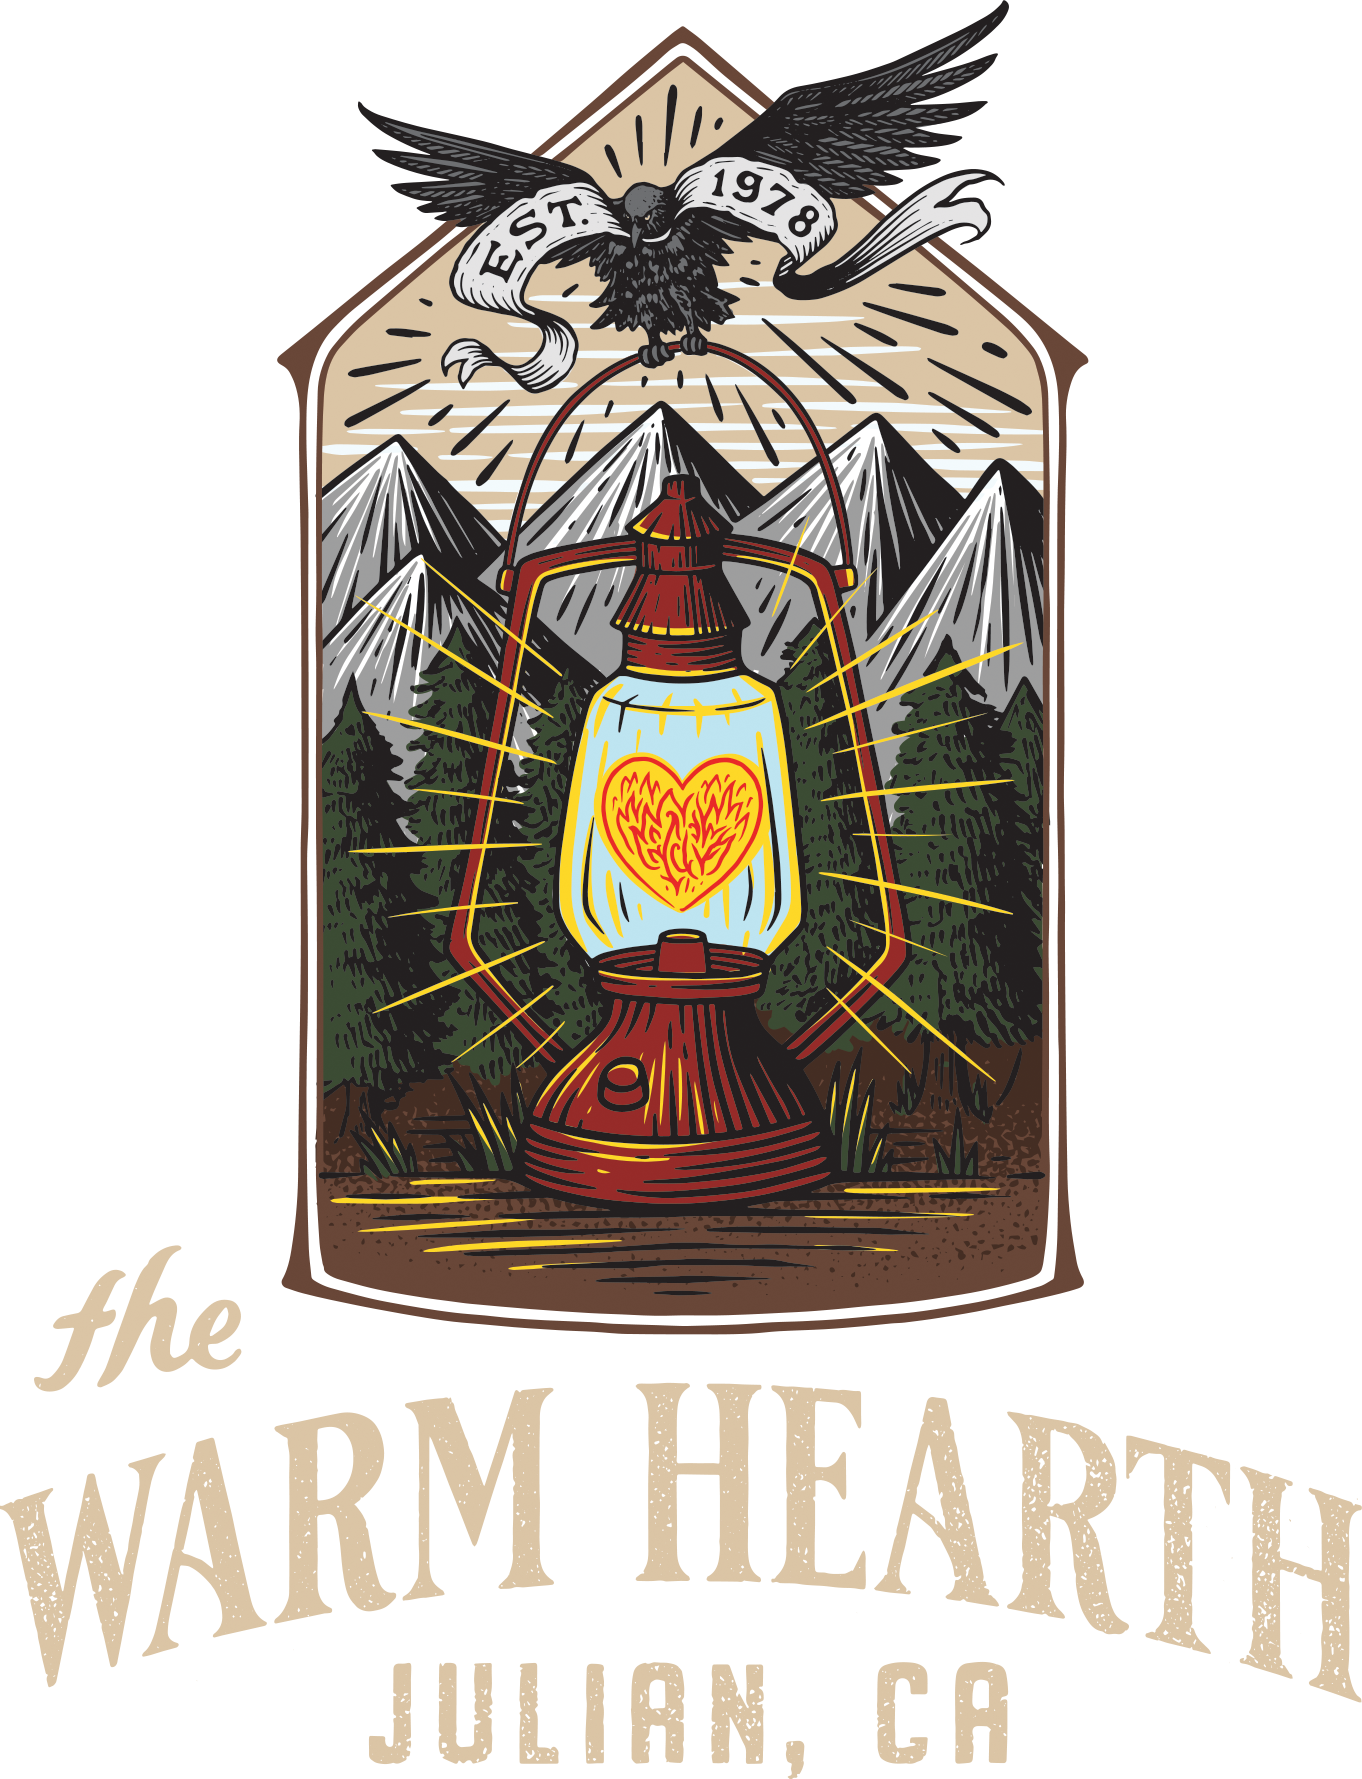 The Warm Hearth, Inc.